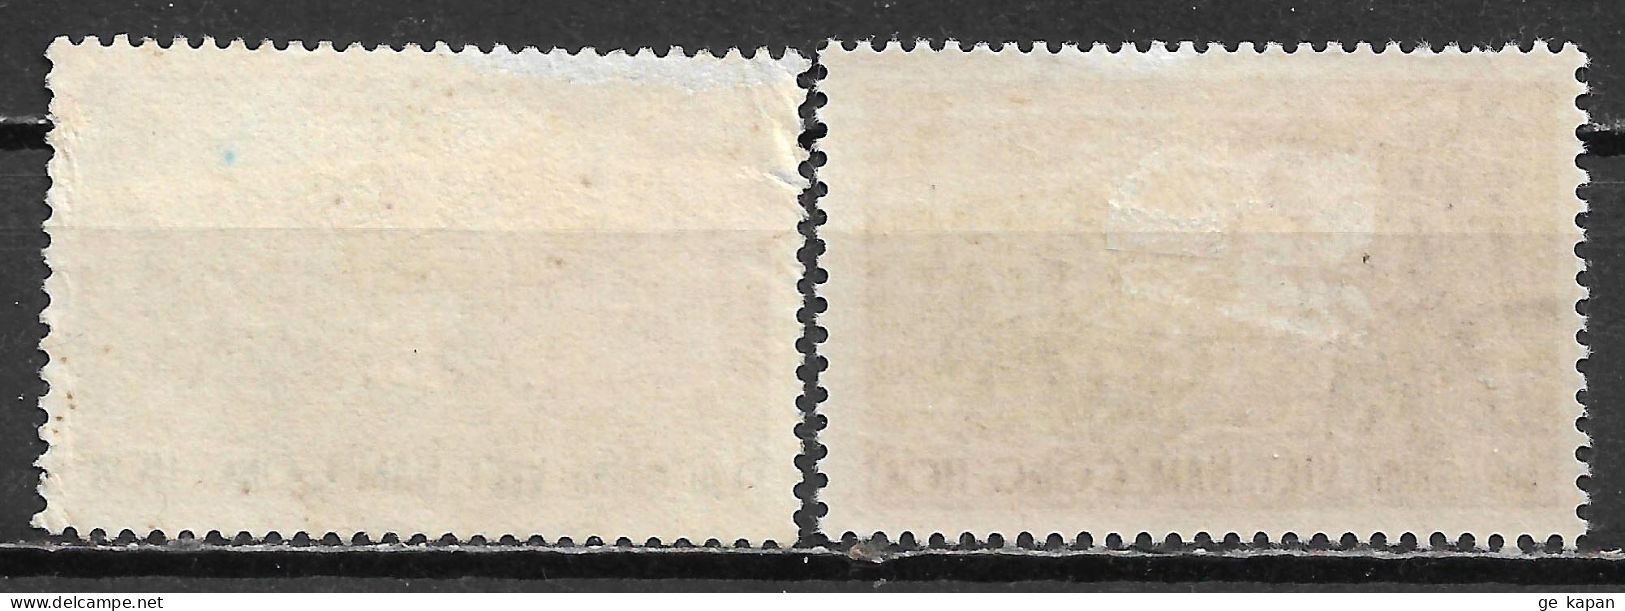 1959 SOUTH VIETNAM MVLH + Used Stamps (Scott # 120,123) CV $3.20 - Vietnam